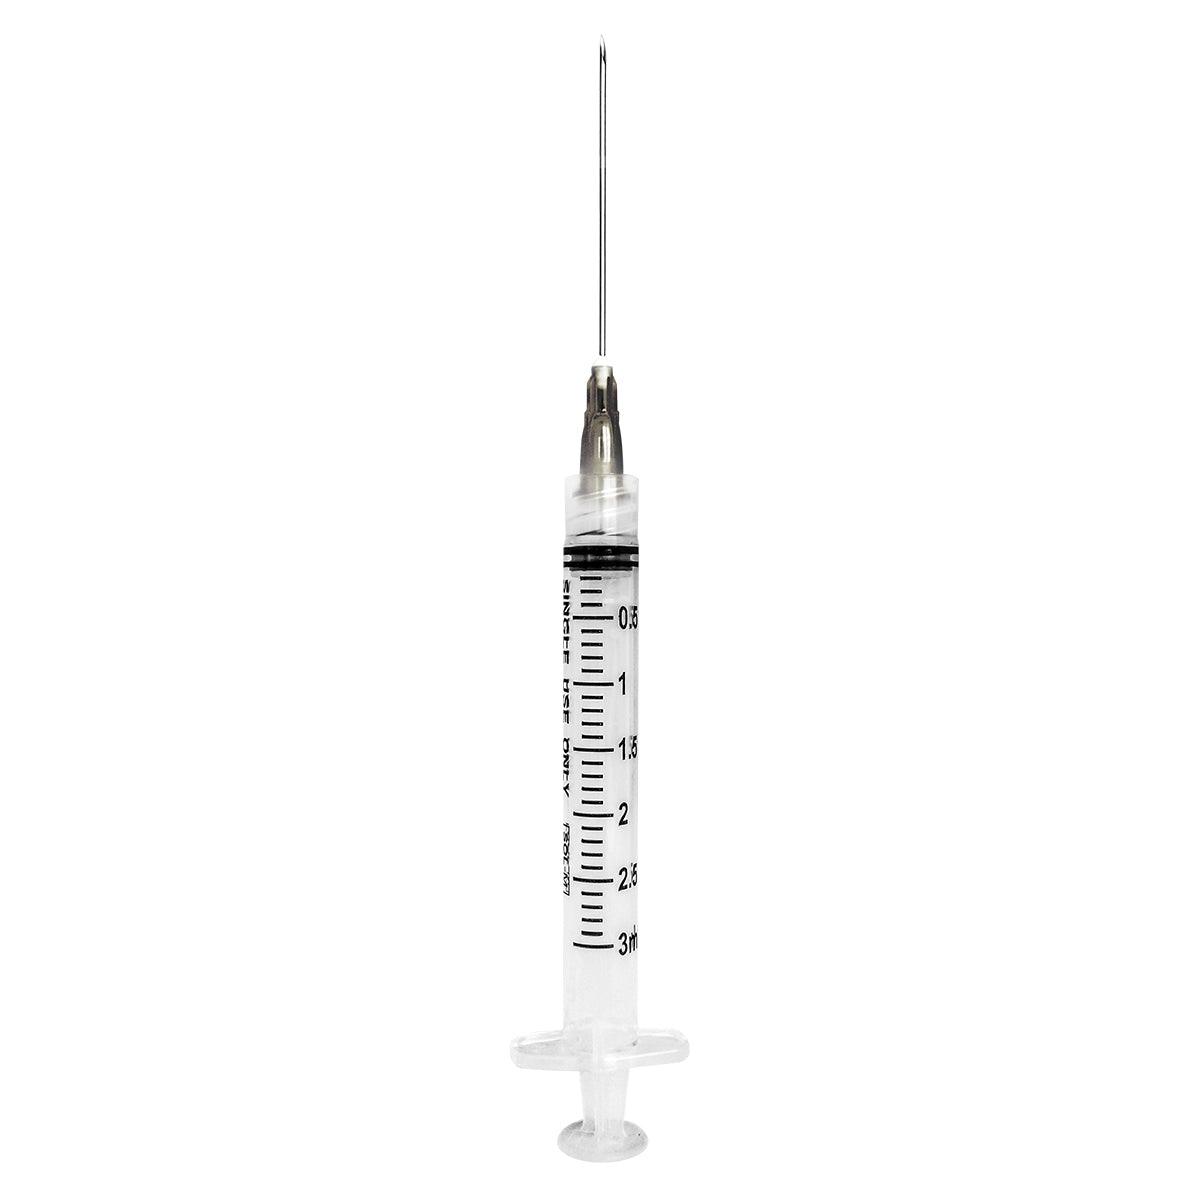 3mL | 22G x 1 1/2" | Sol-M 1832215 Luer Lock Syringe with Exchangeable Needle (100pcs)